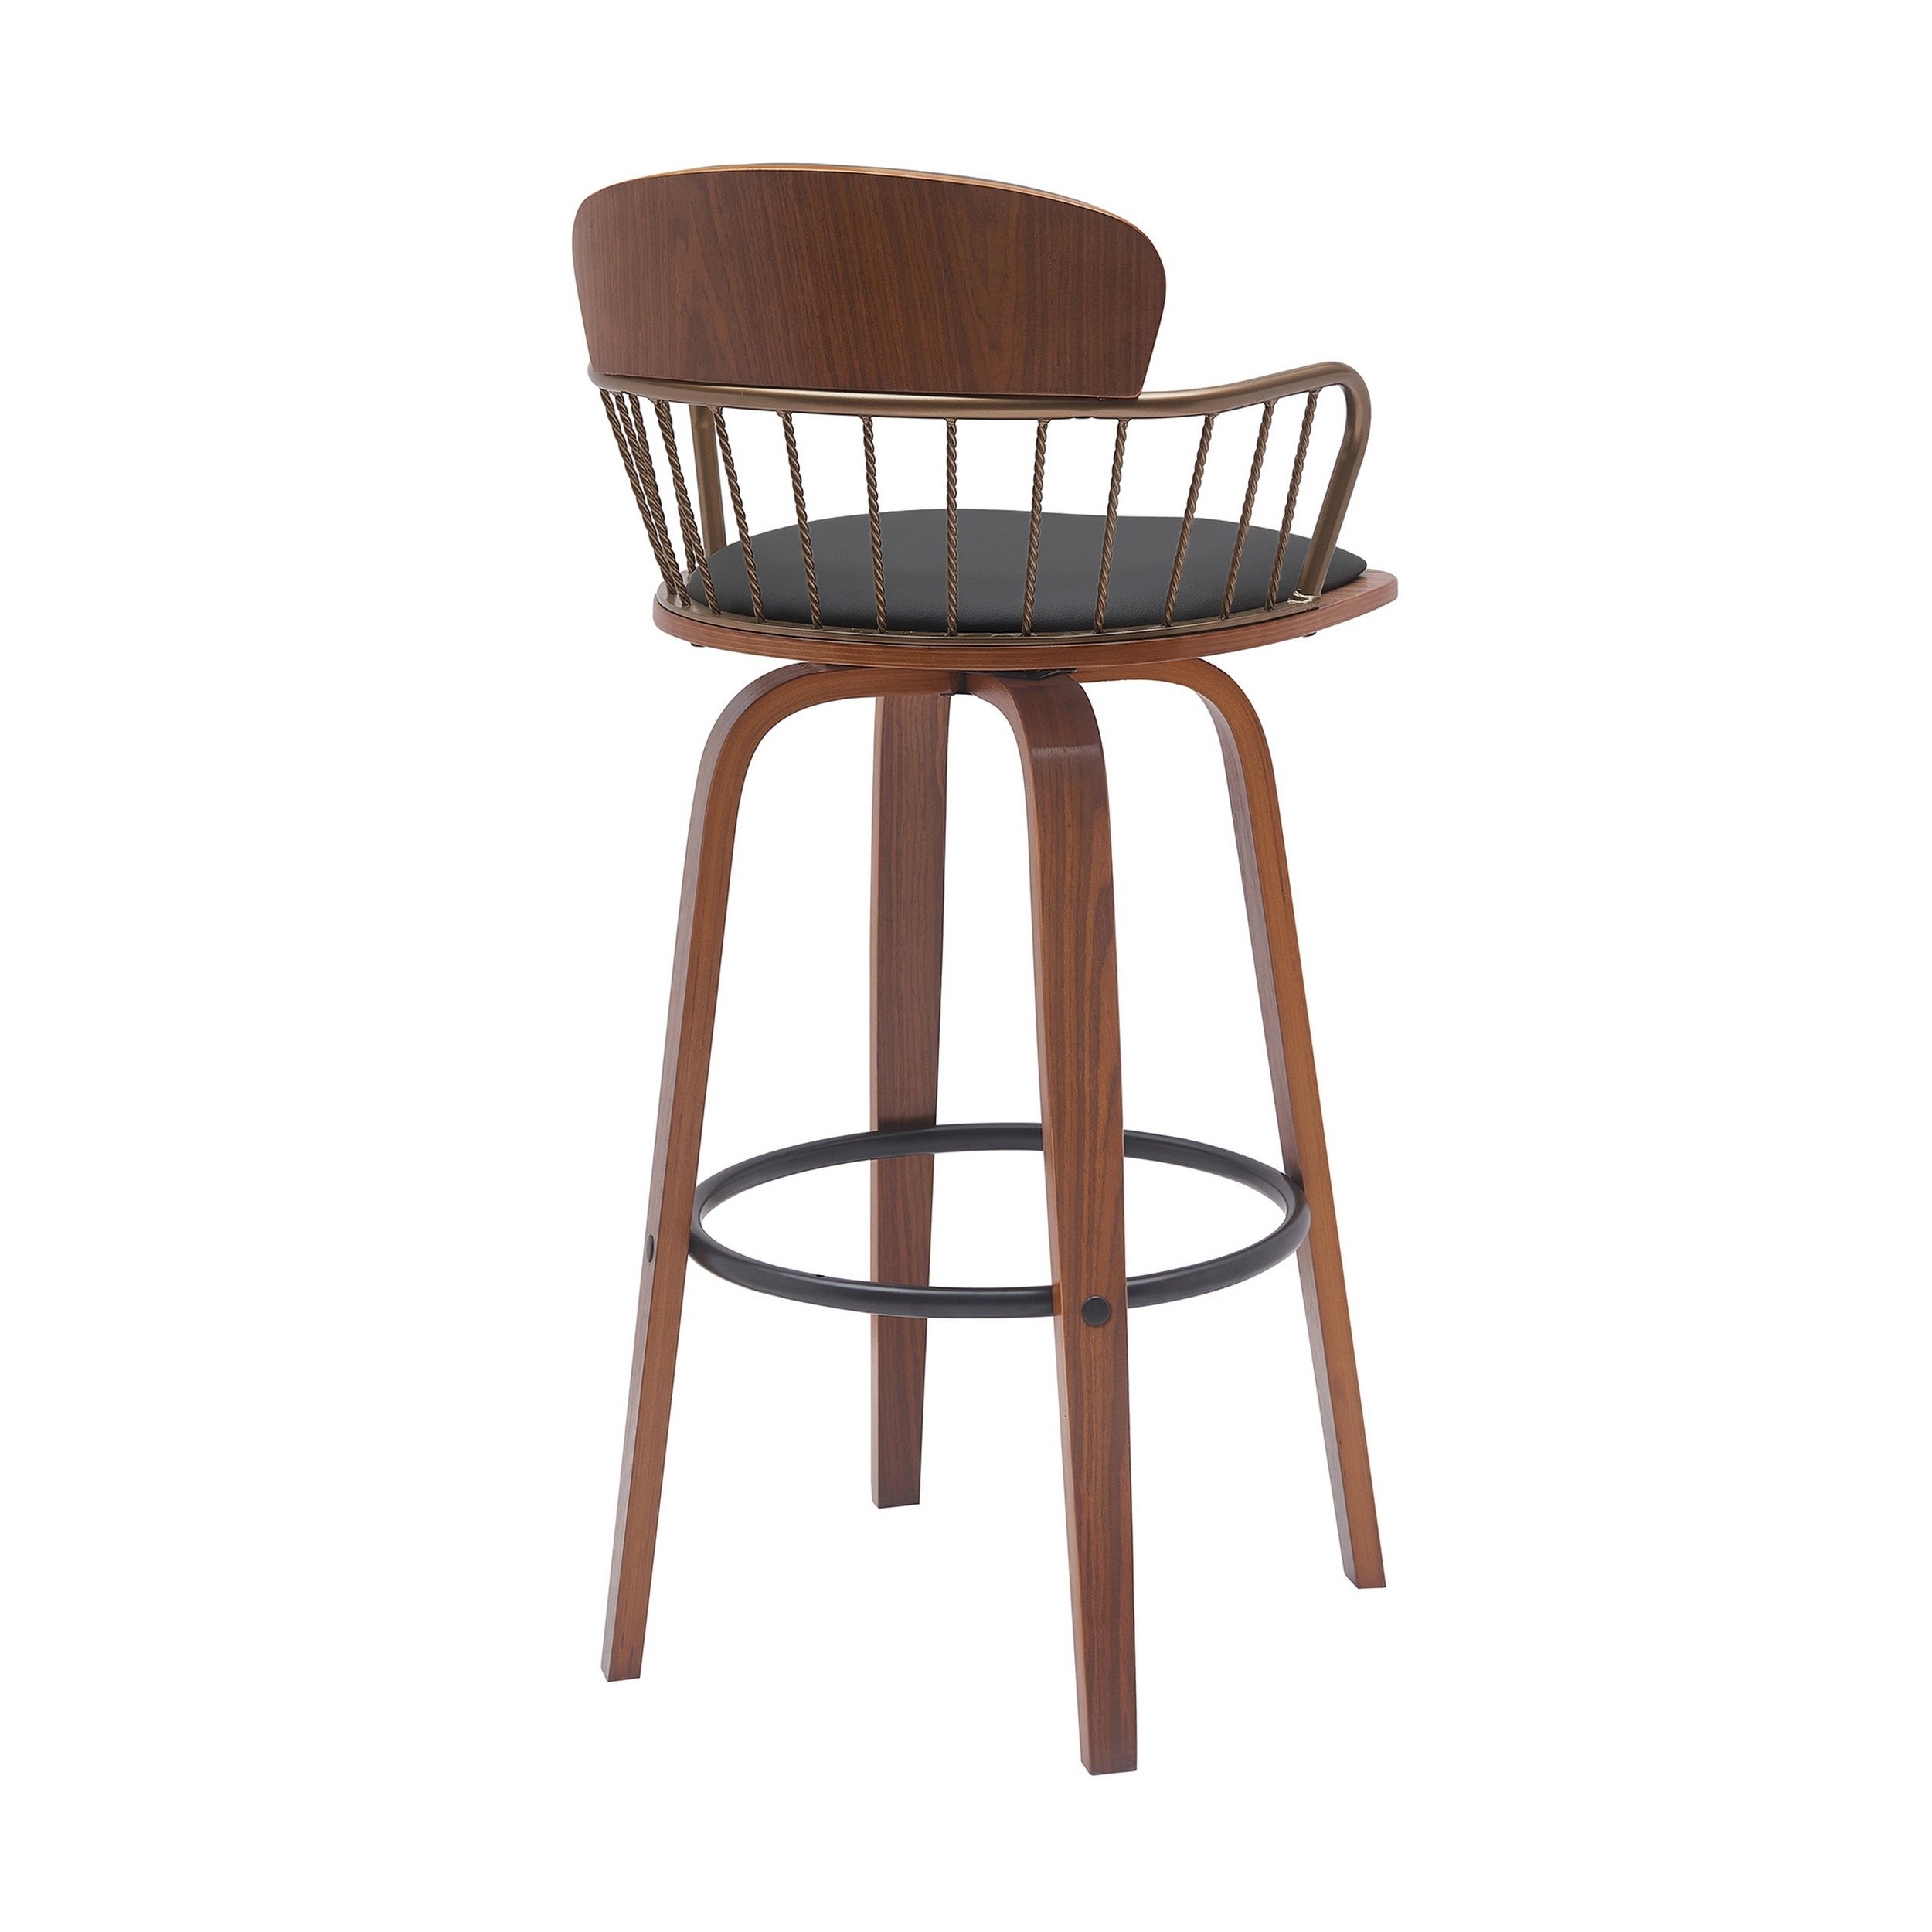 Wiz 30 Inch Barstool Chair, Slatted Back, Black Faux Leather, Walnut Brown - Saltoro Sherpi